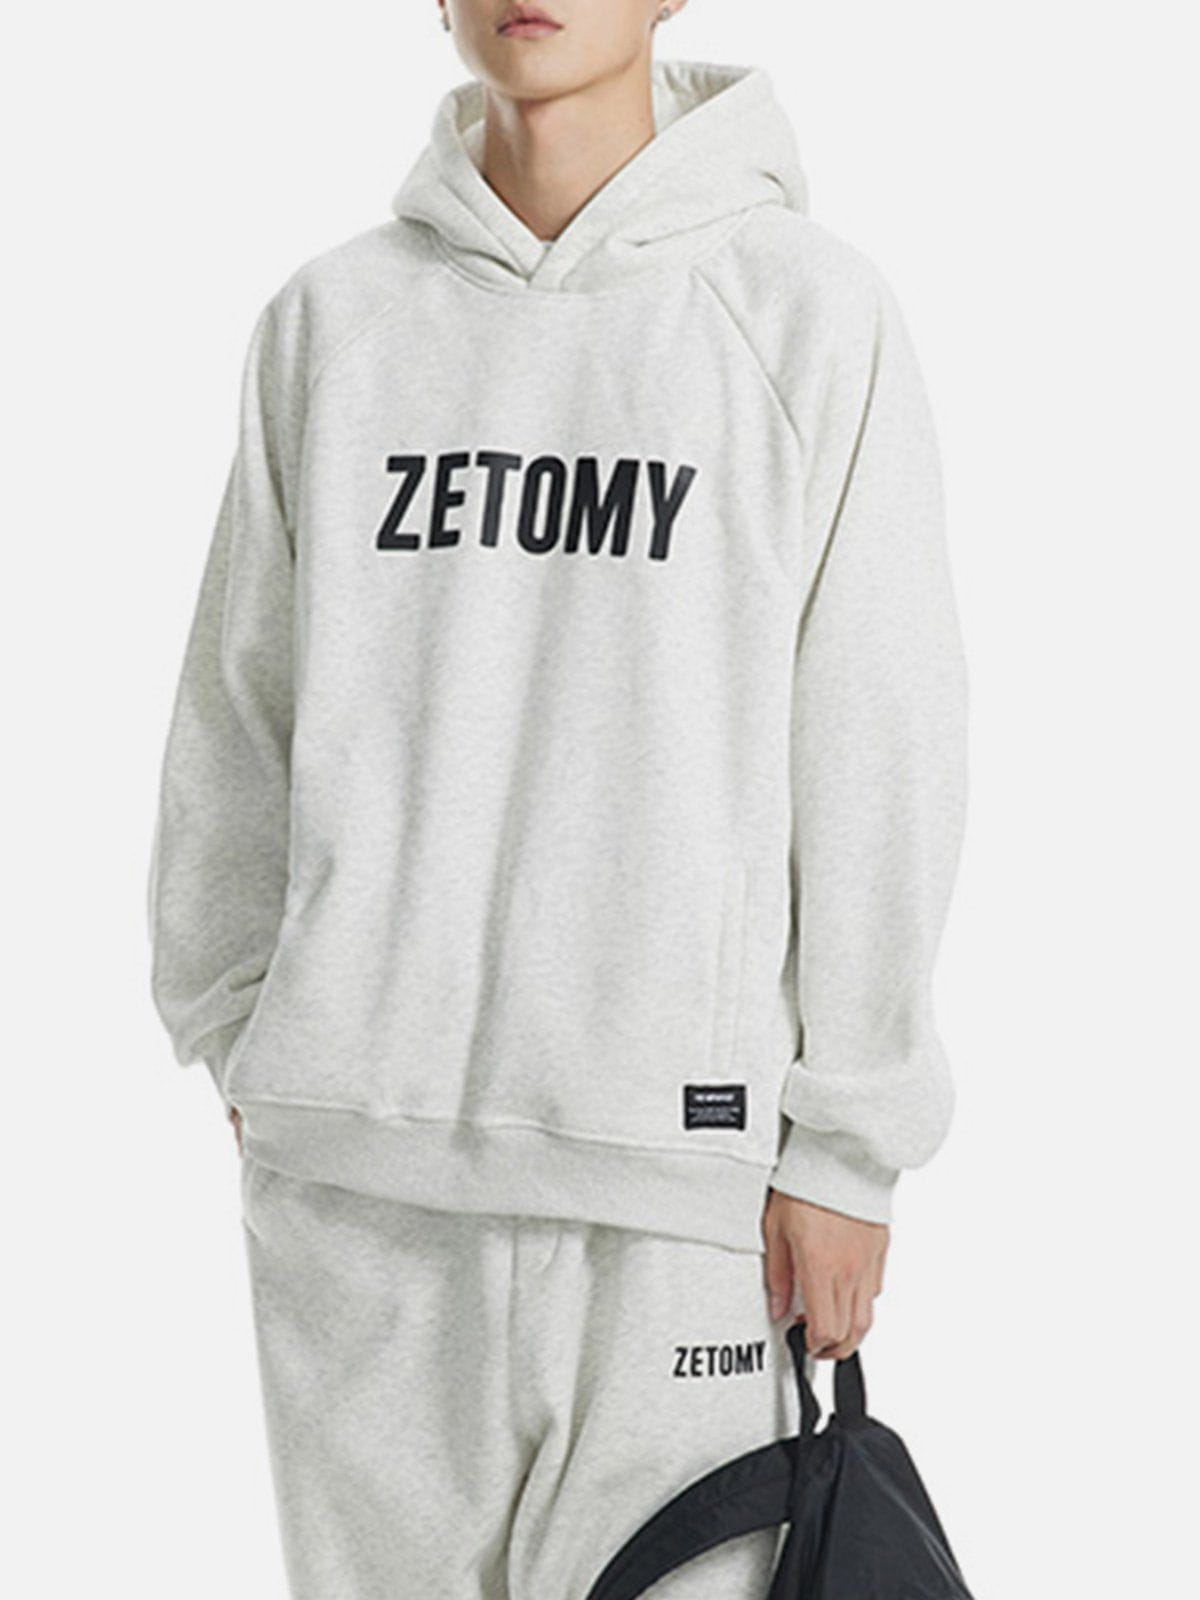 Majesda® - ZETOMY Print Hoodie outfit ideas streetwear fashion